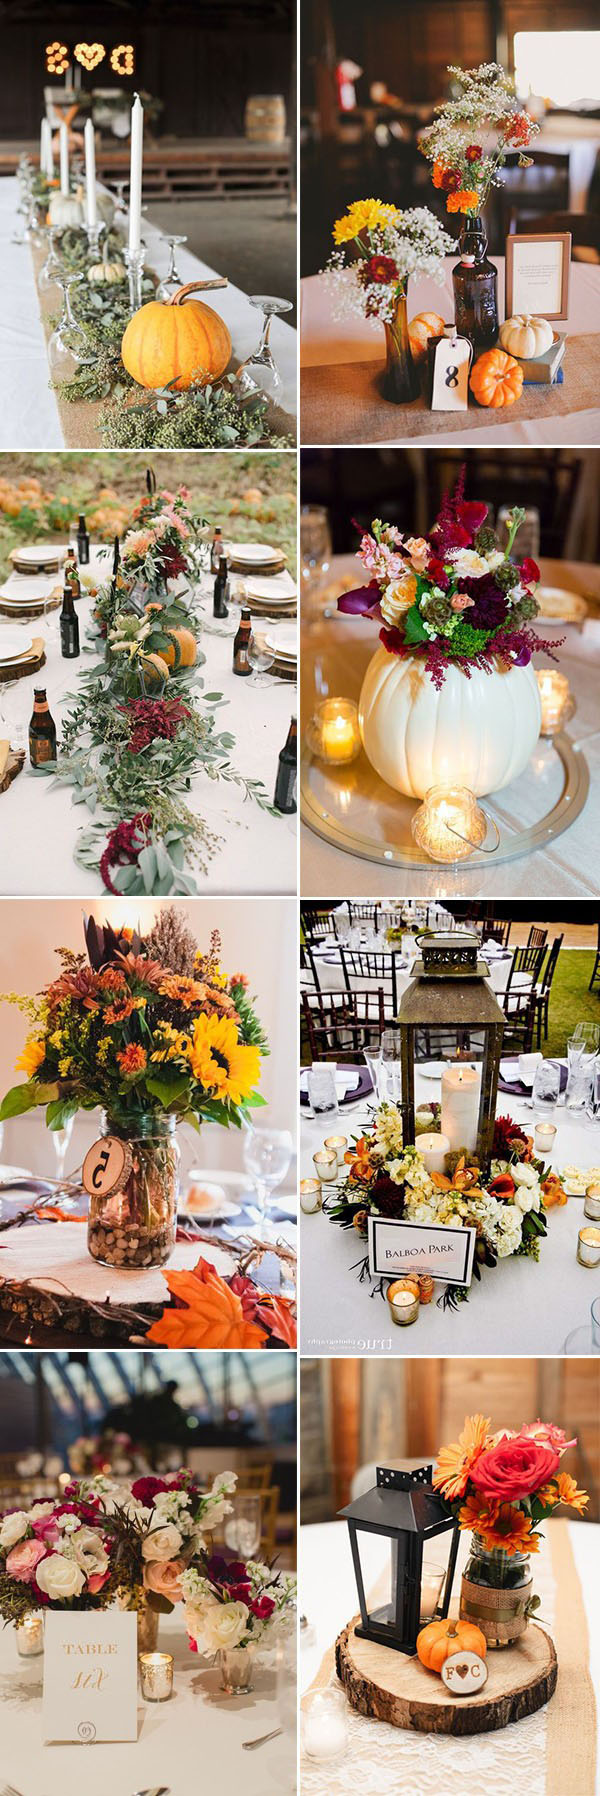 beautiful creative fall wedding centerpieces ideas